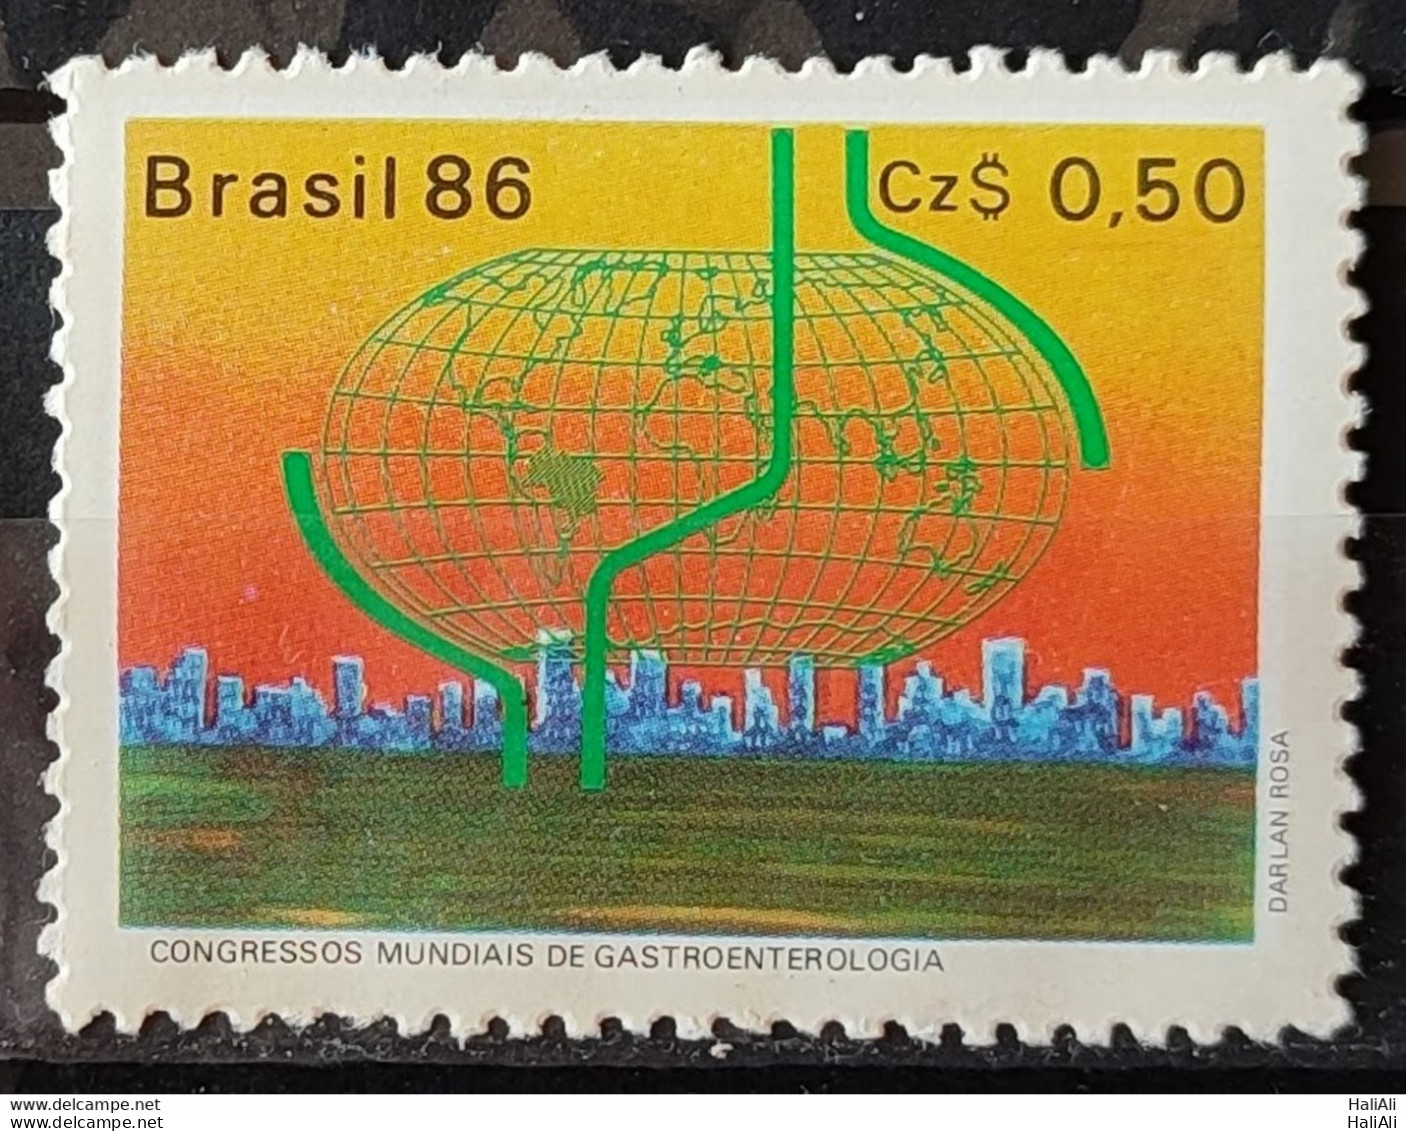 C 1520 Brazil Stamp Congress Of Gastroenterology Health 1986.jpg - Neufs